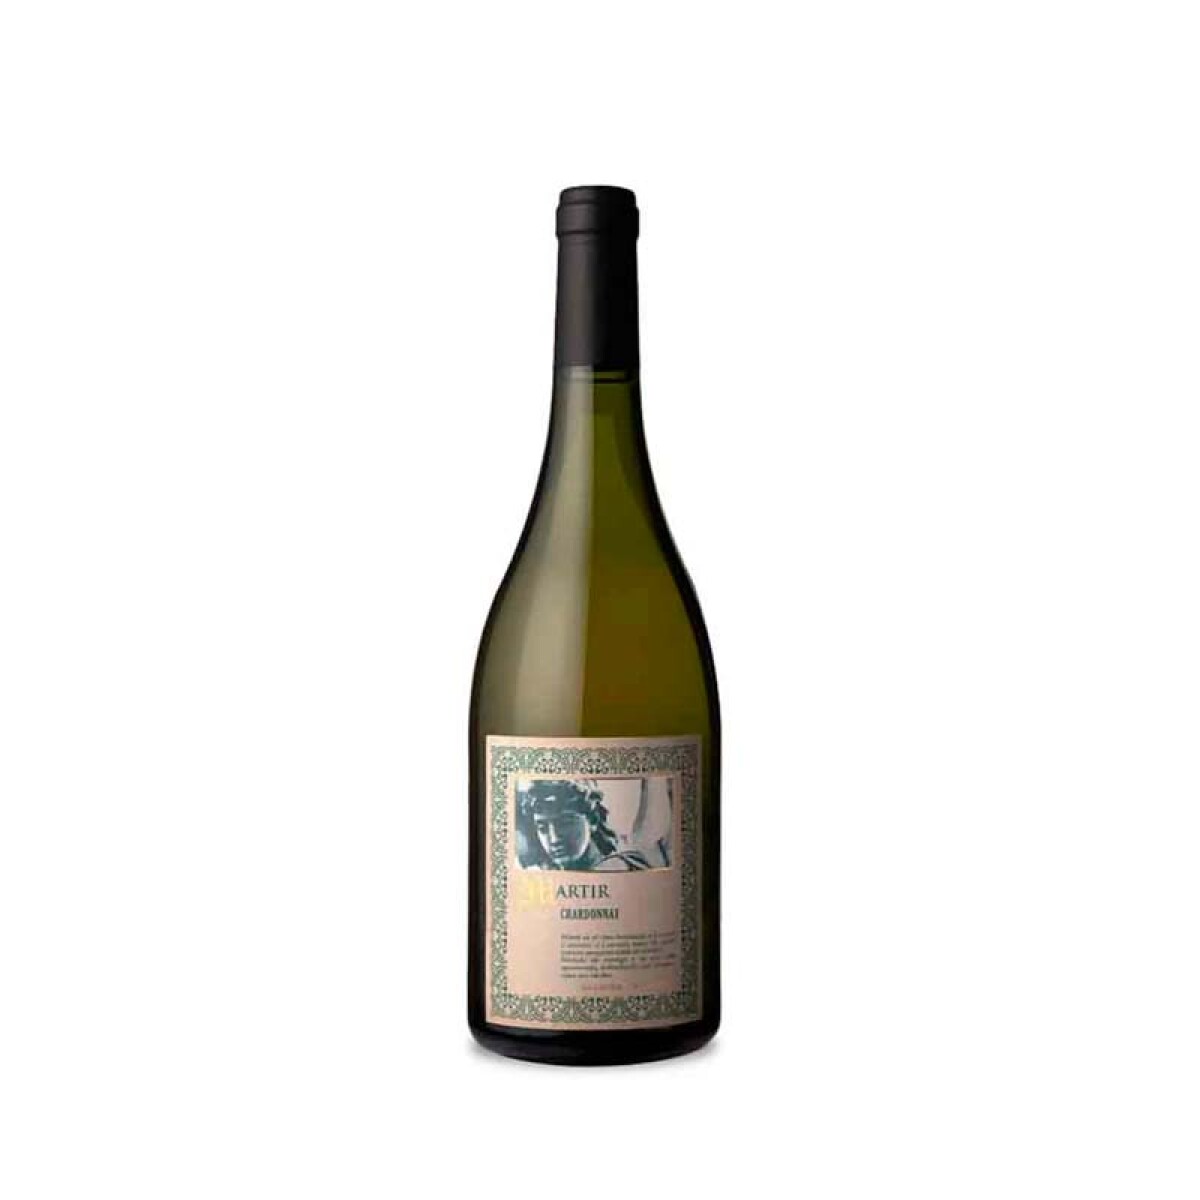 Vino Lorenzo Martir Chardonnay - 750 ml 